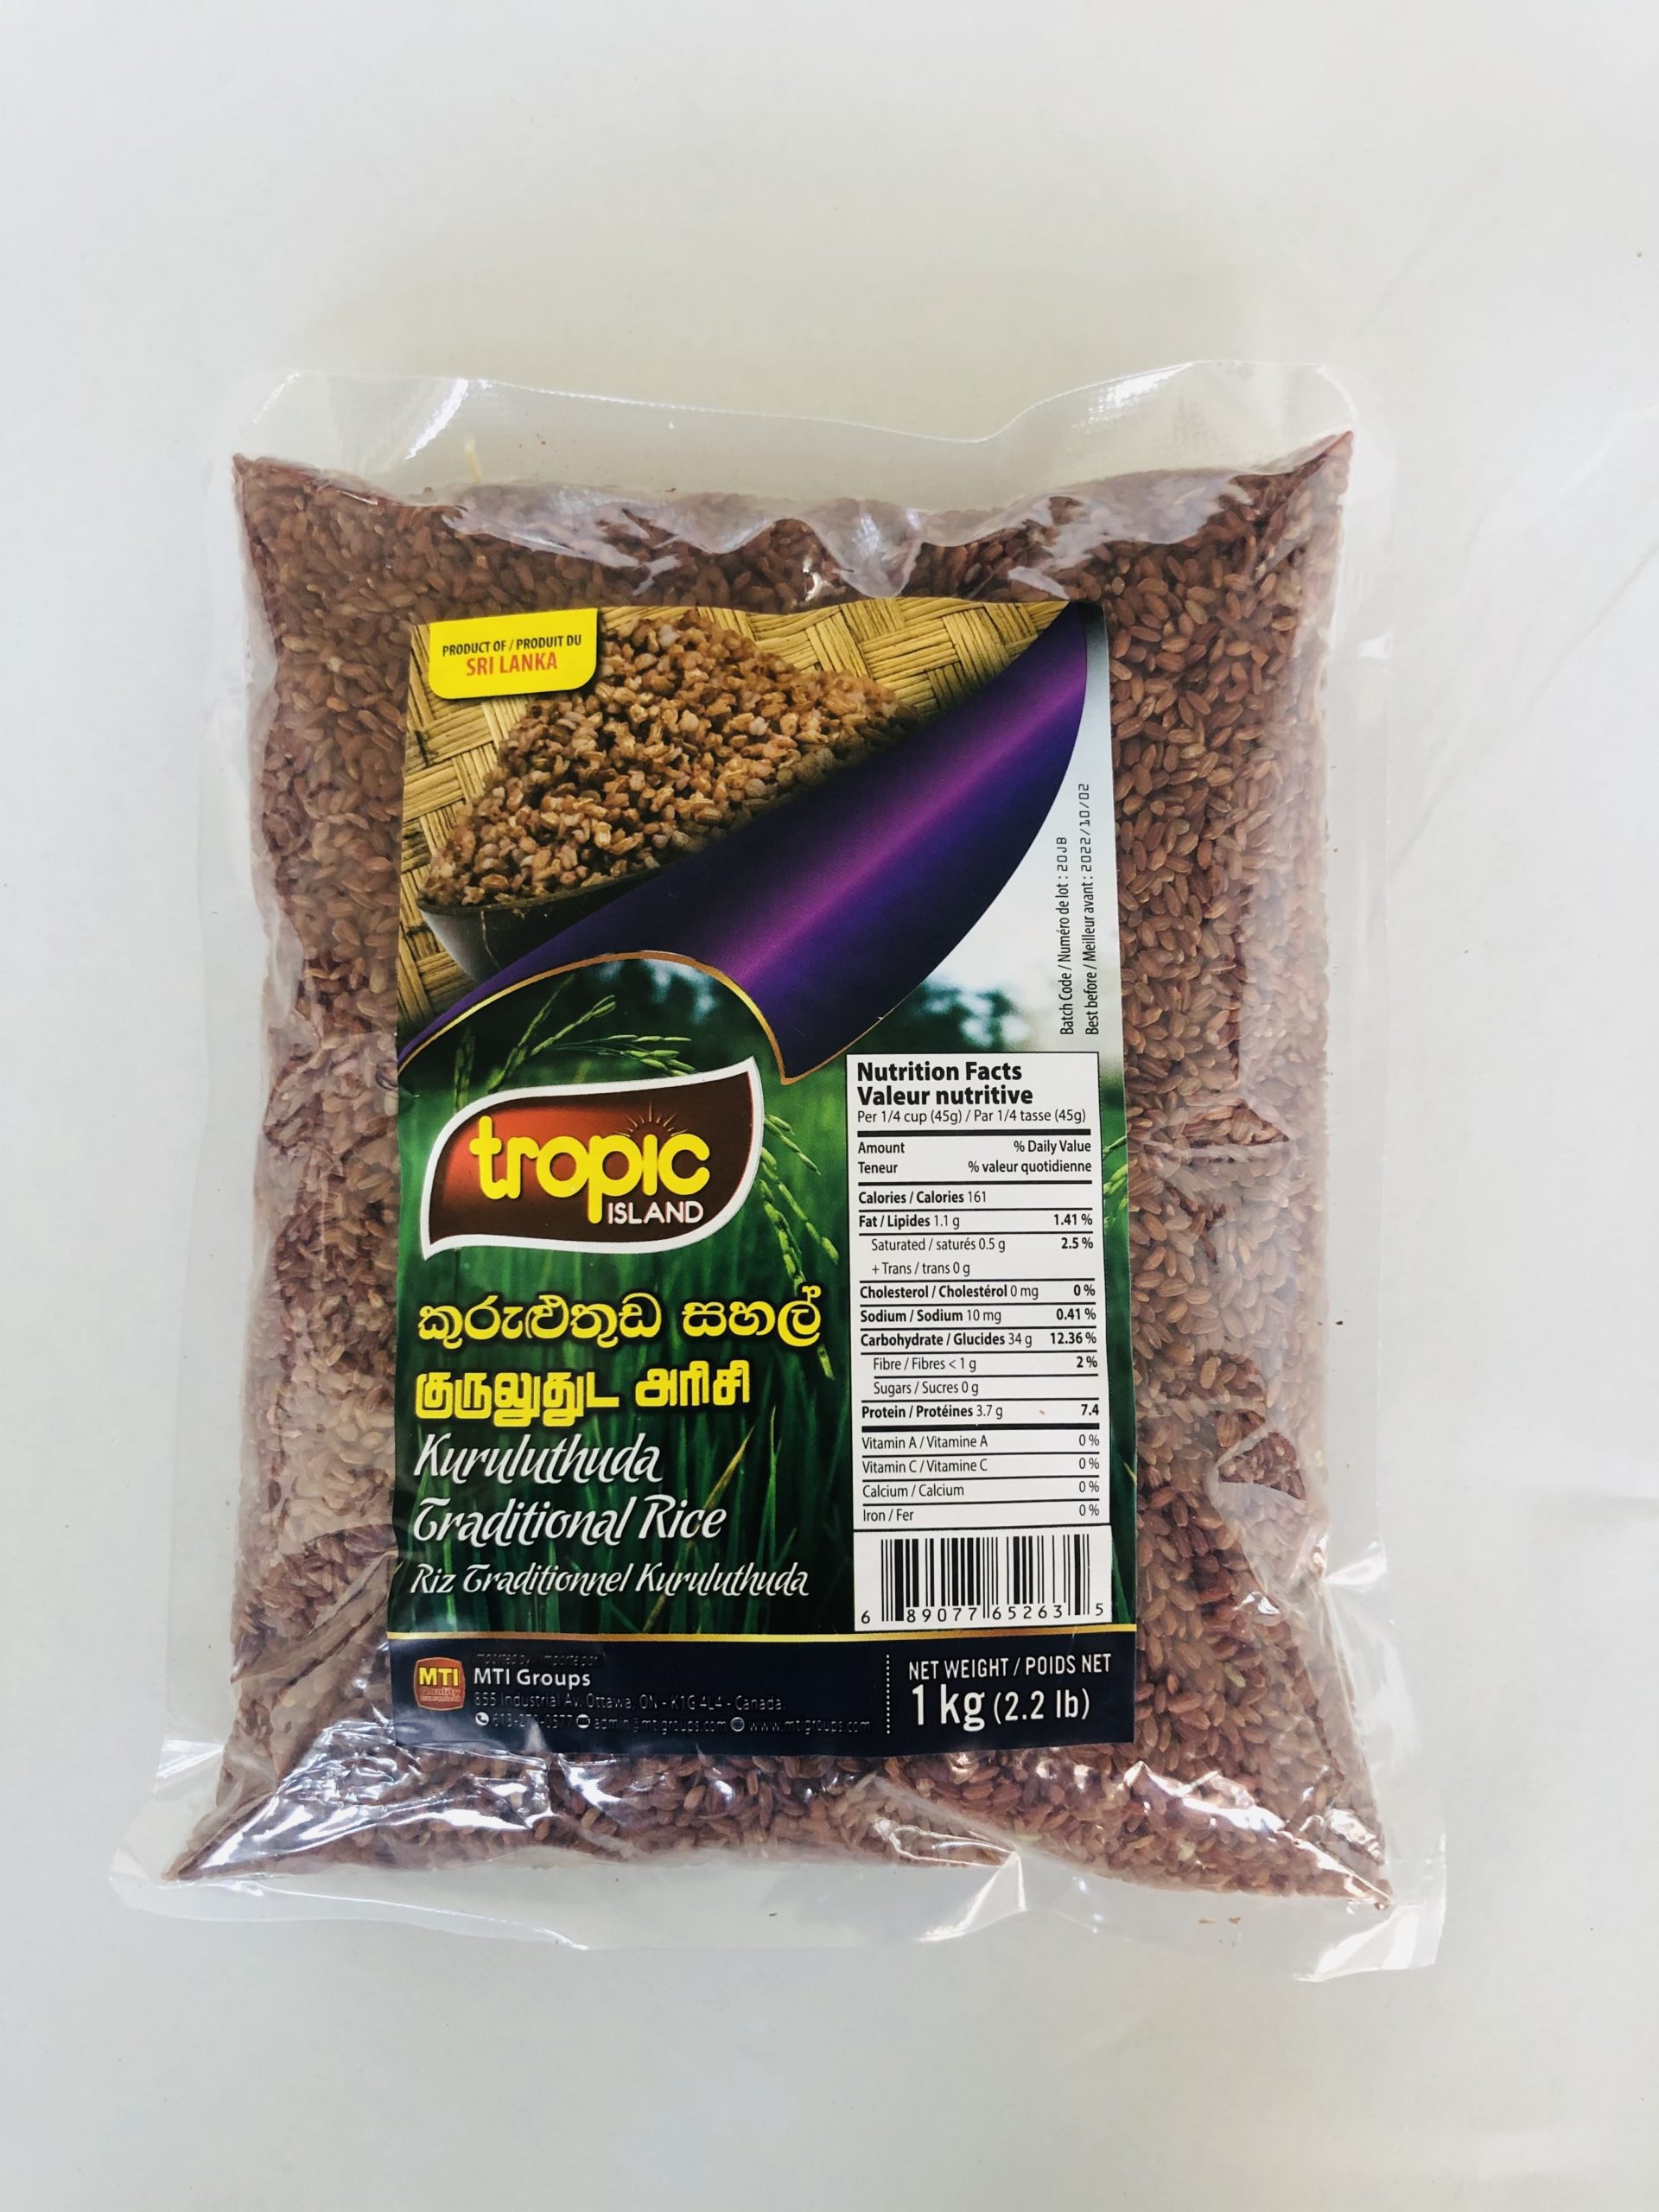 Tropic: Kuruluthuda Traditional Rice – 1kg